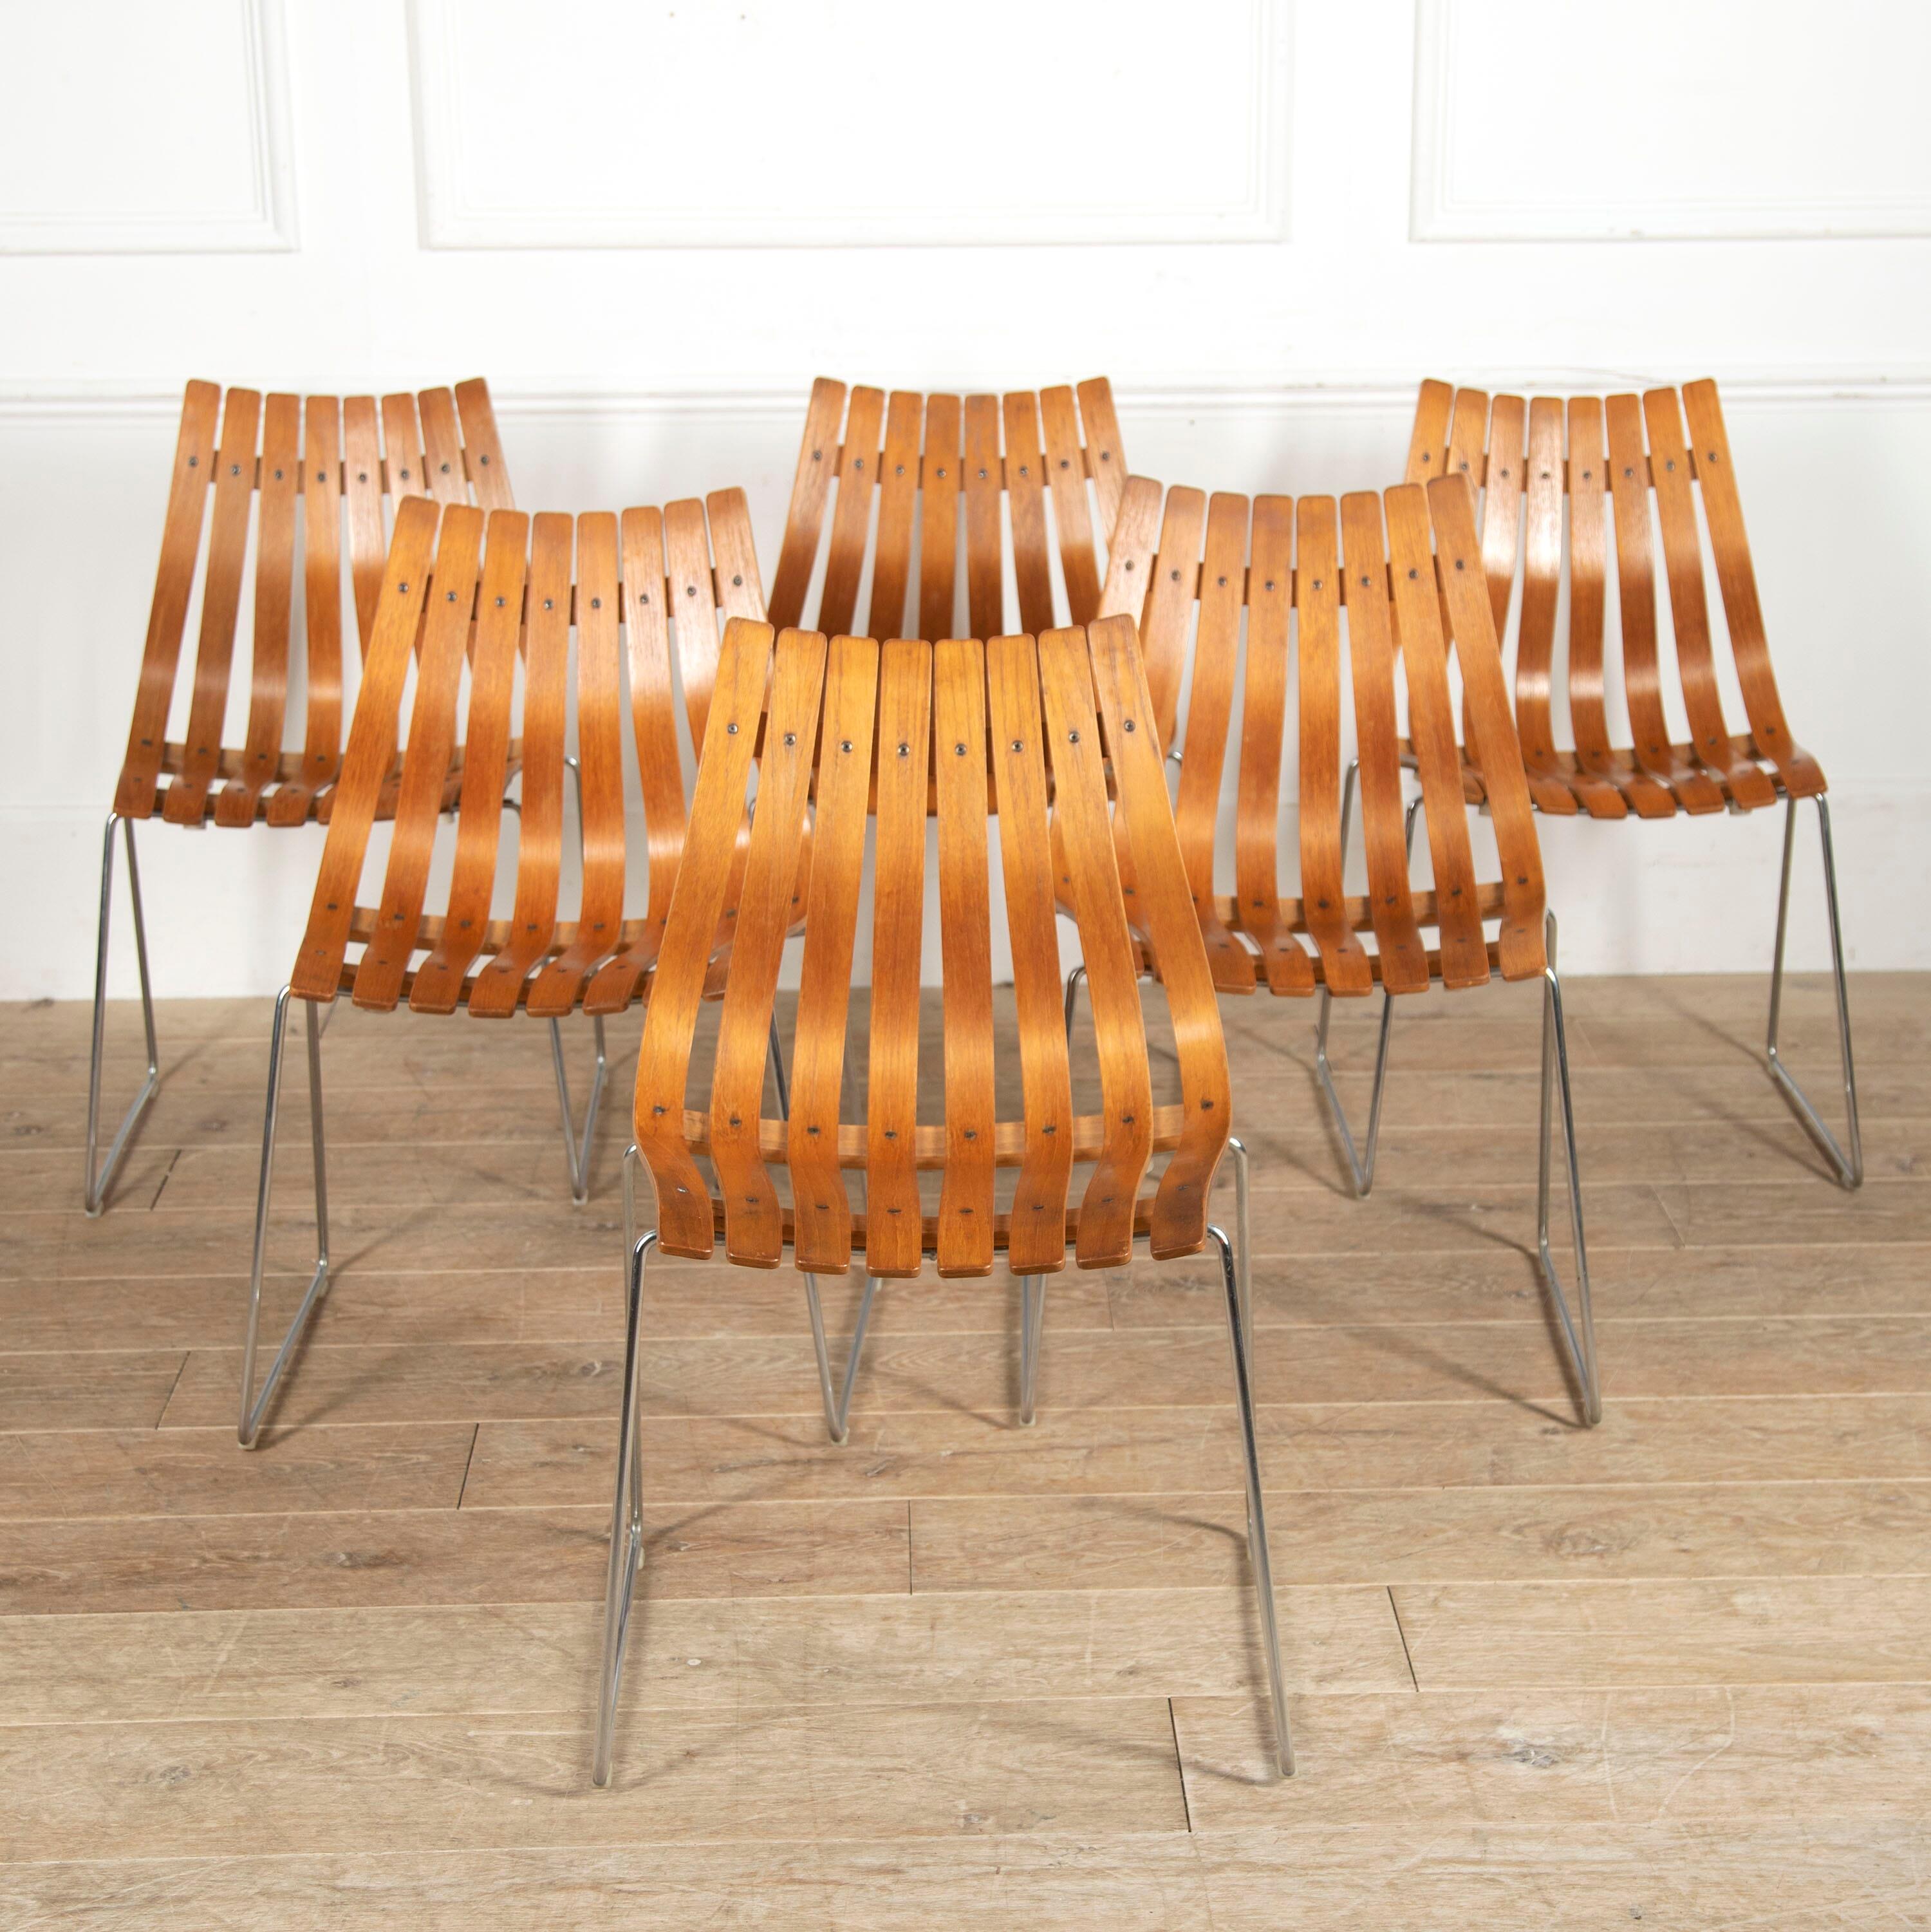 20th Century Set of Six 1960s Hans Brattrud Dining Chairs